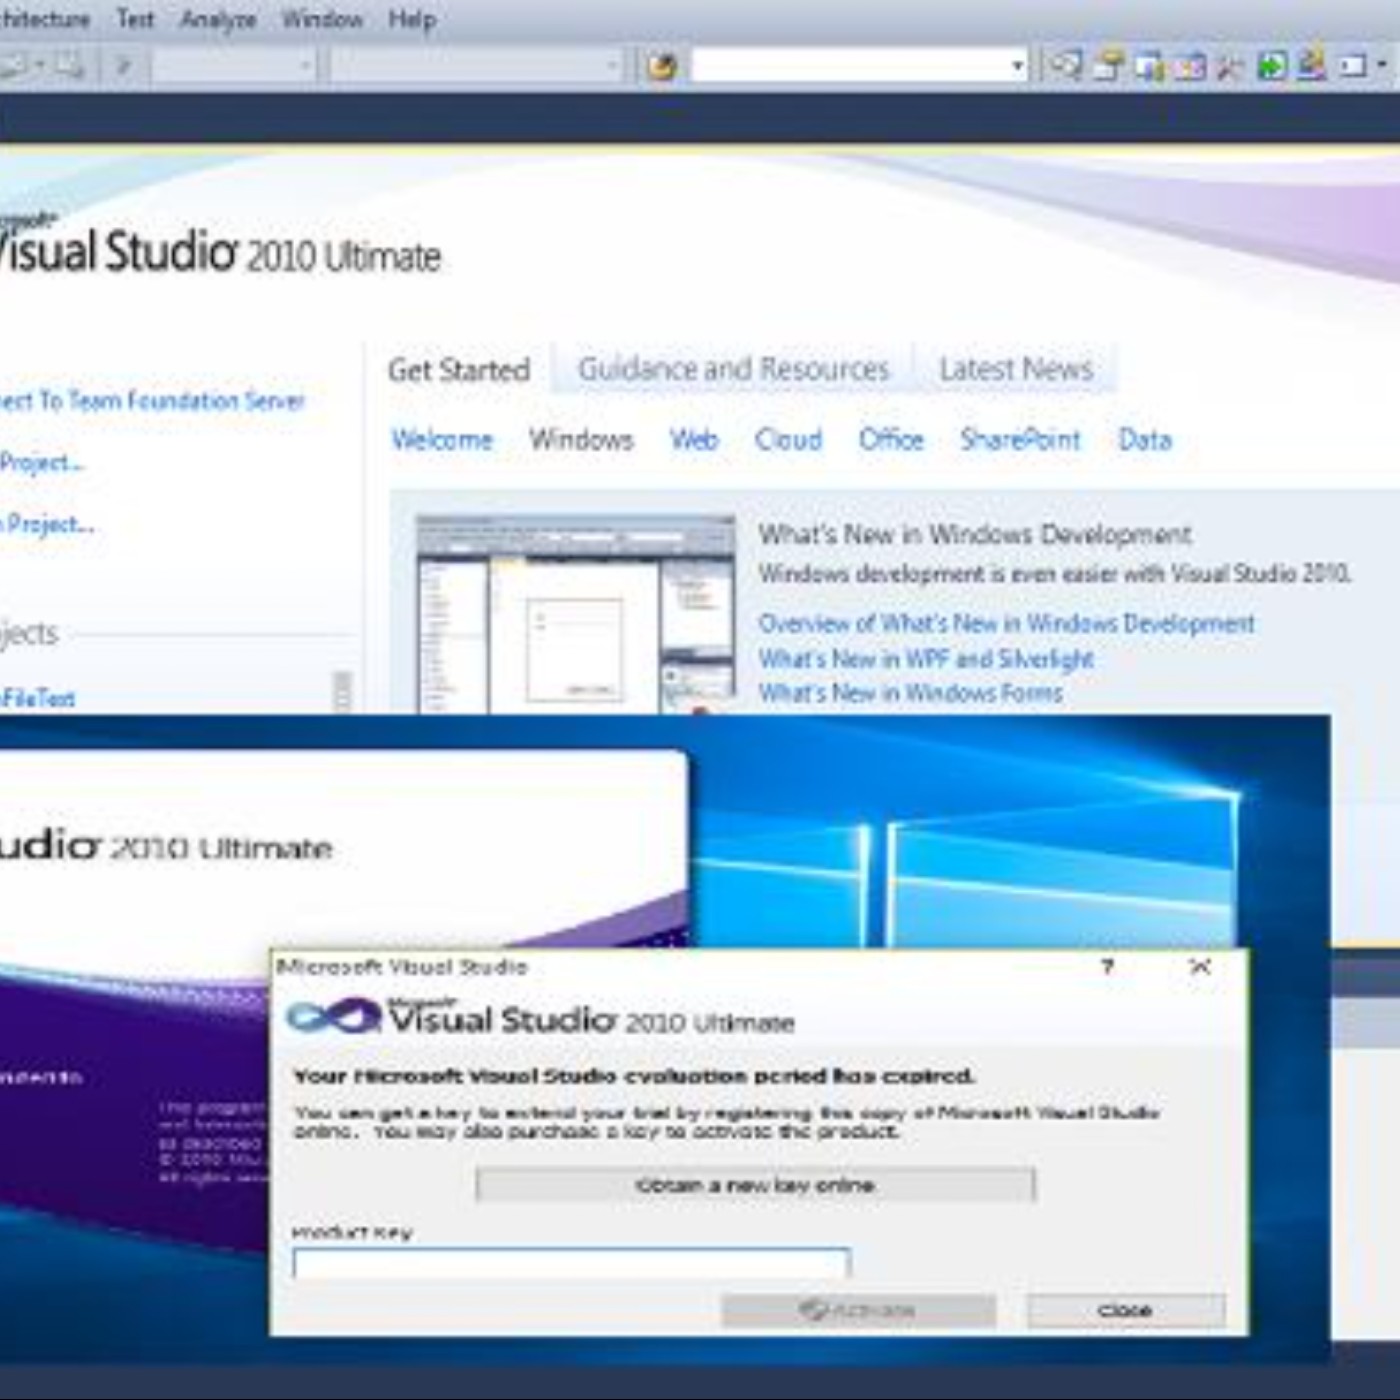 Visual Studio 2010 Ultimate Free Download Full Version For Windows.